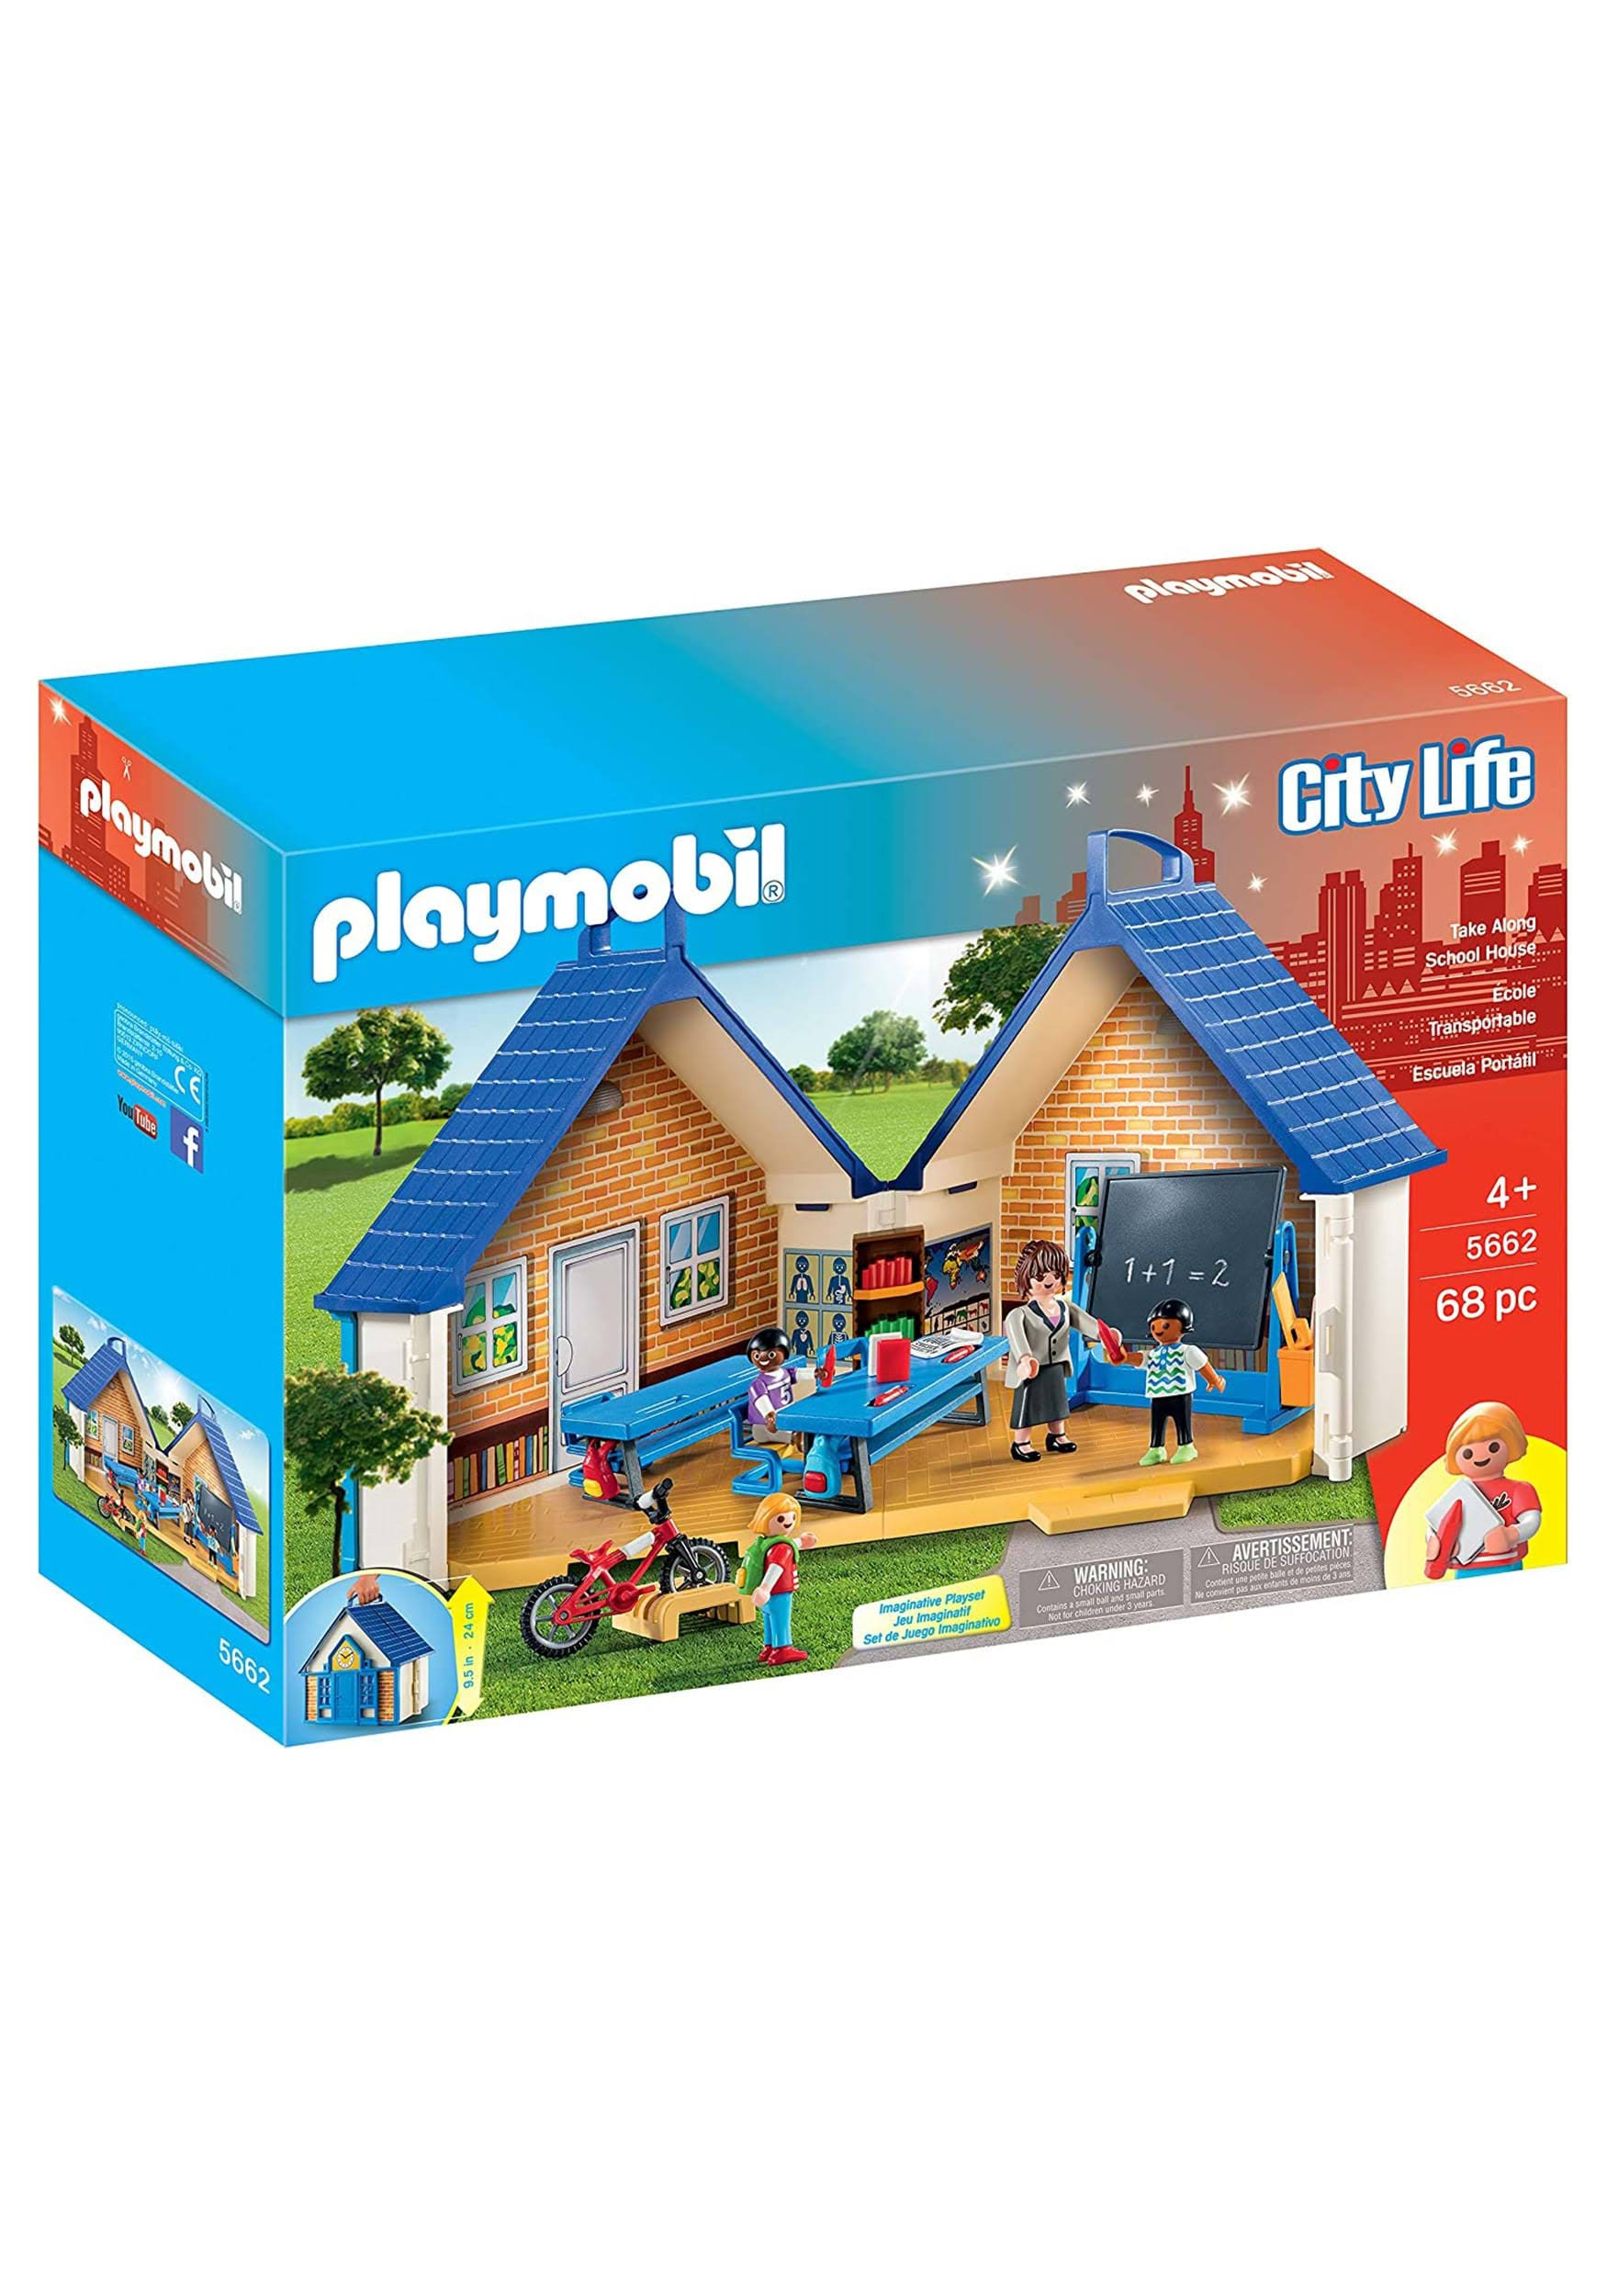 Playmobil City Life Playset - Take Along School House